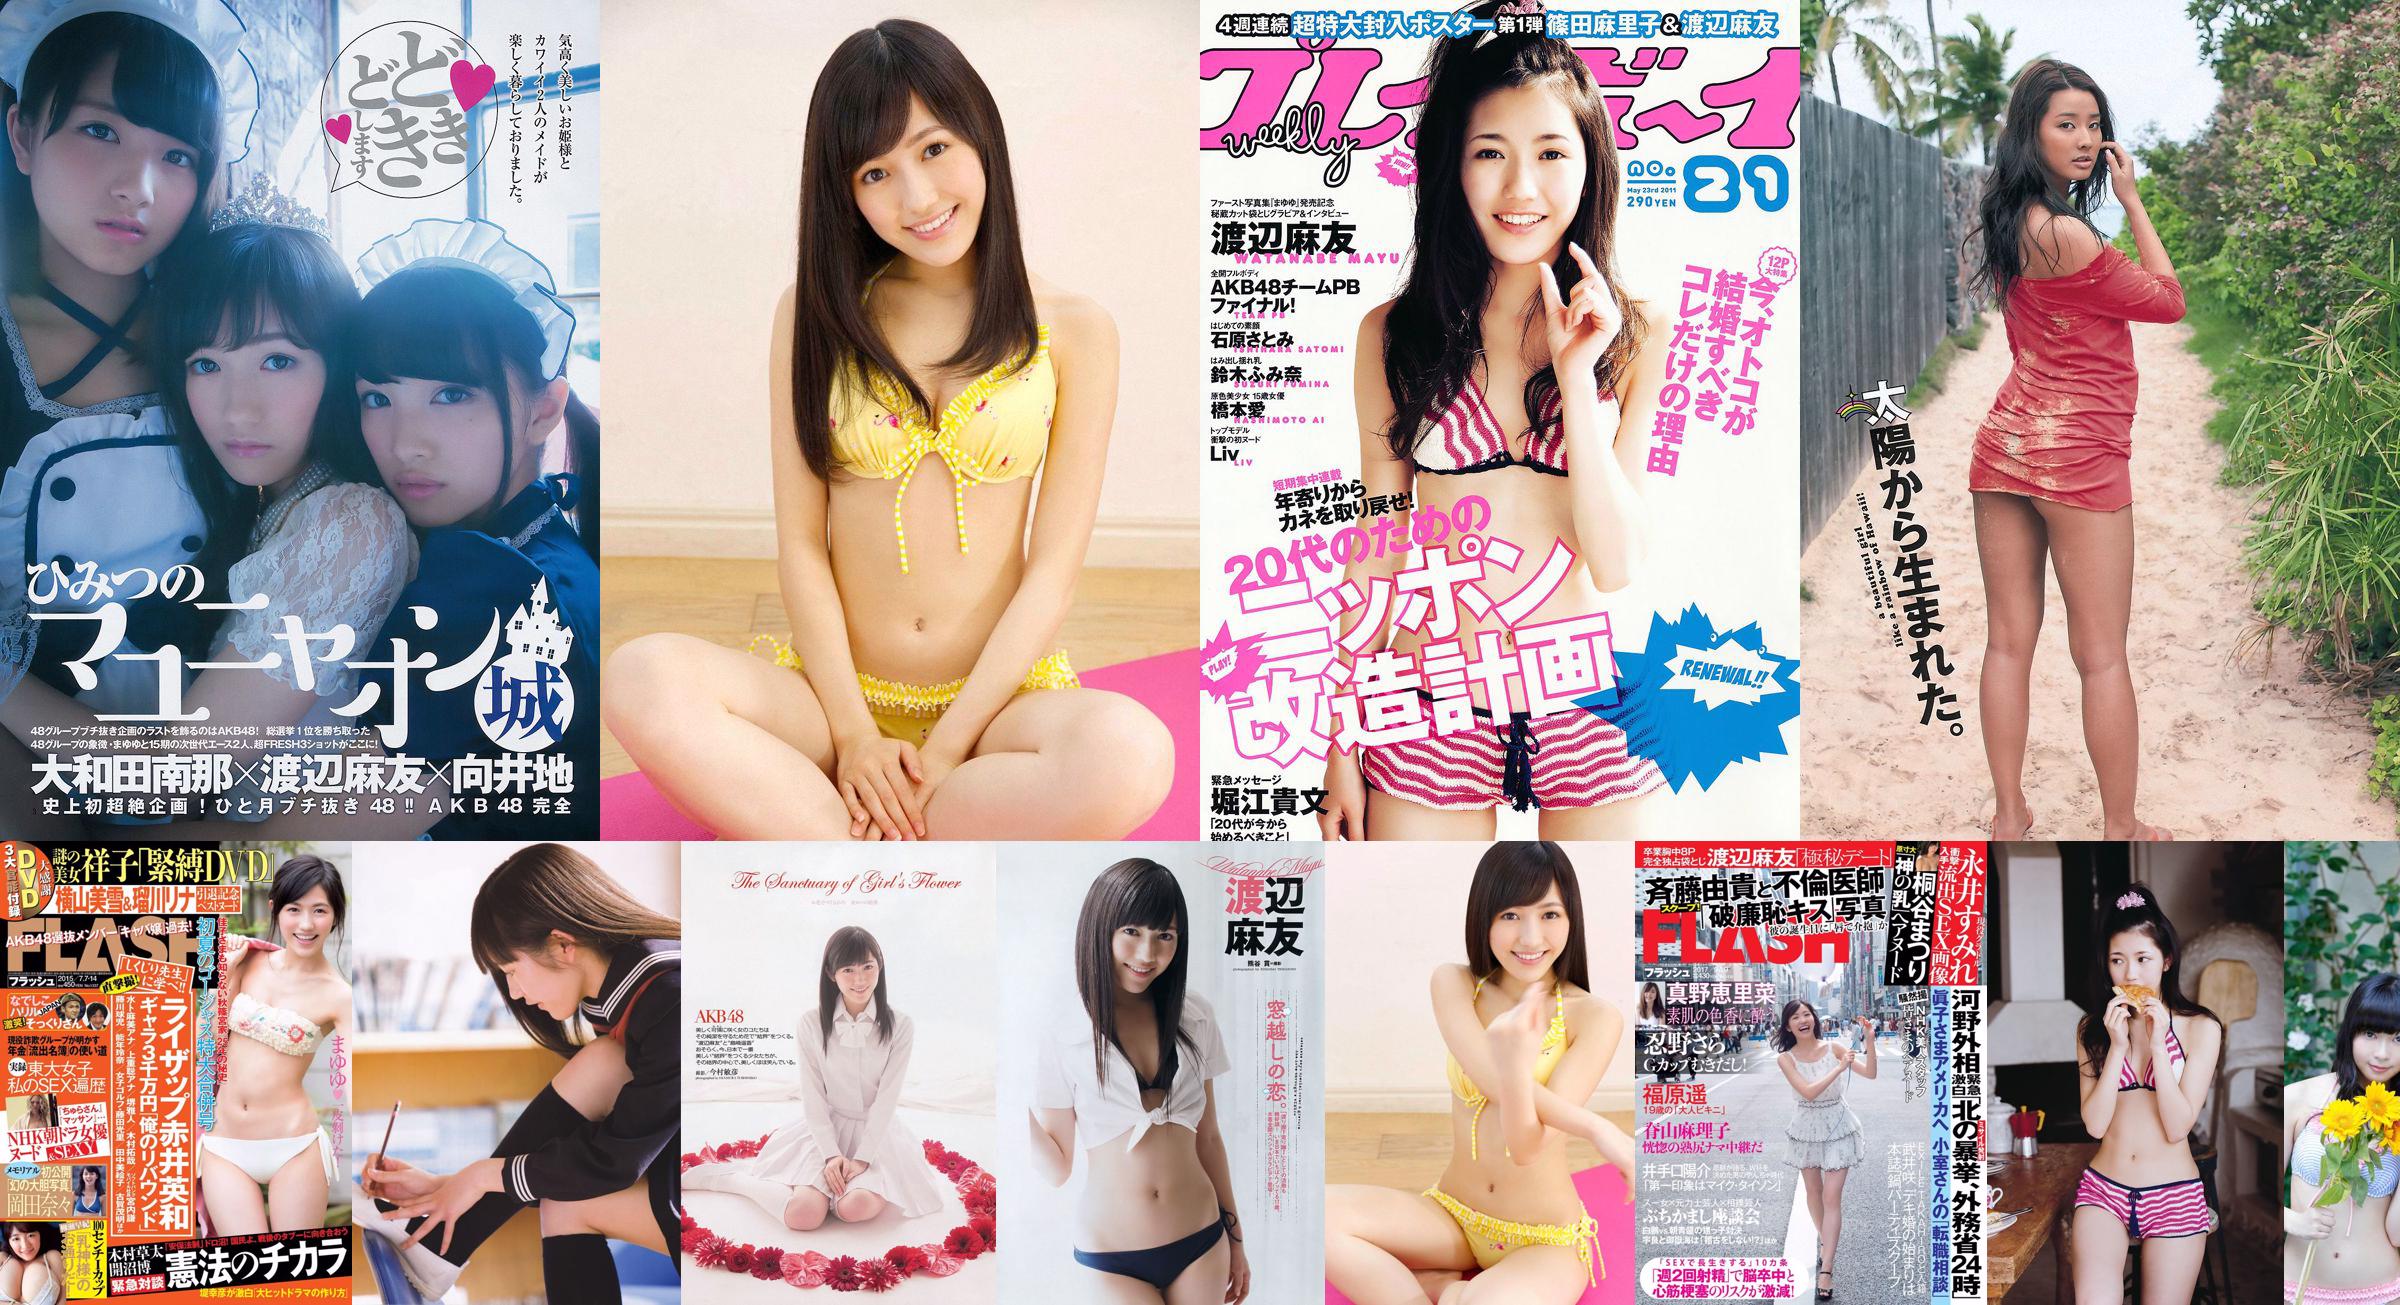 [Young Magazine] Watanabe Mayu, Kawae Rina 2401 No.27 Photo Magazine No.d9e8b0 Page 1